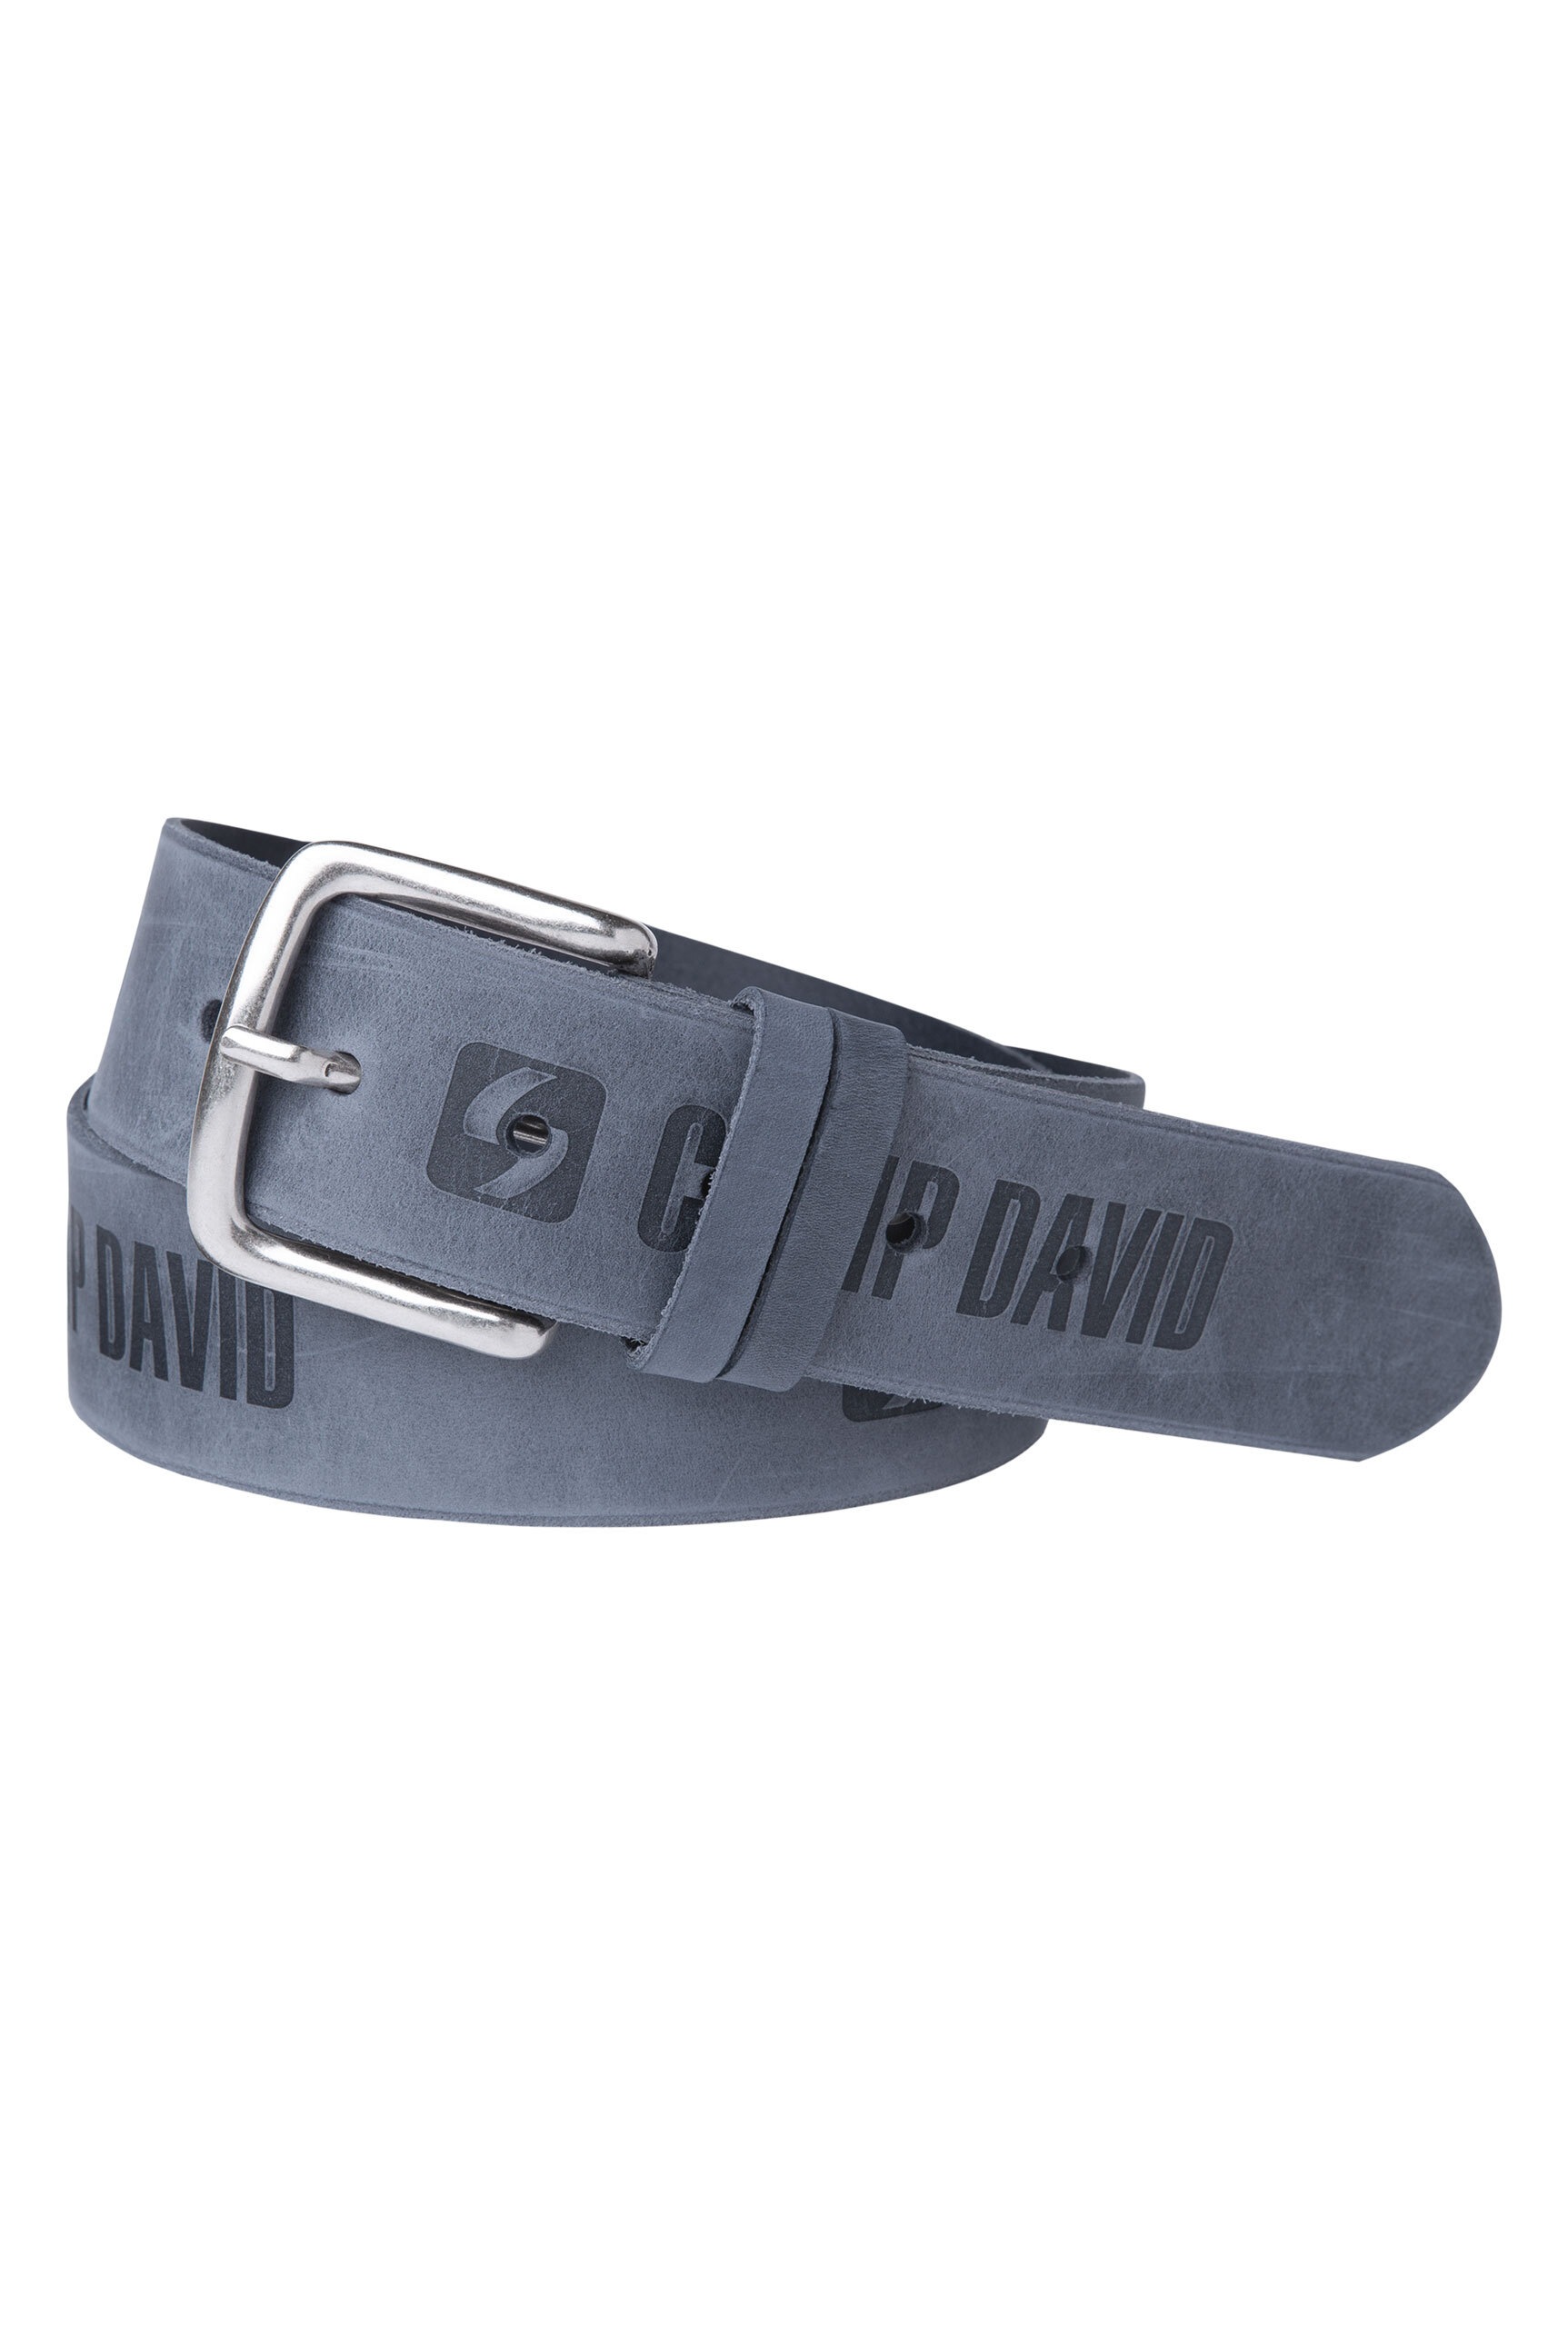 walking mit CAMP I\'m DAVID | Used-Optik kaufen Ledergürtel, online